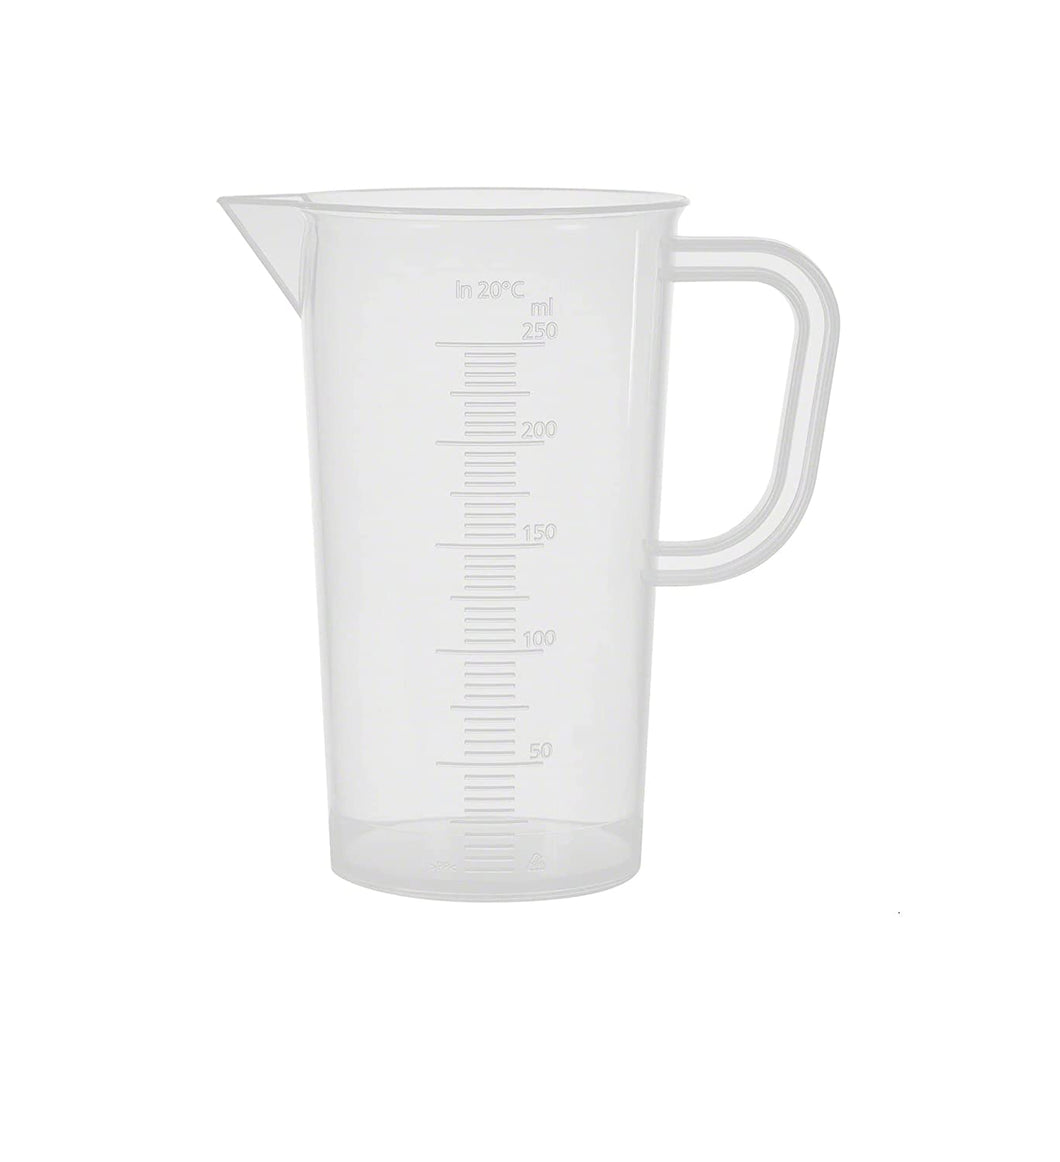 Measuring Mug 250 ml Polypropylene Plastic Transparent for Measuring Liquids Pack of 1